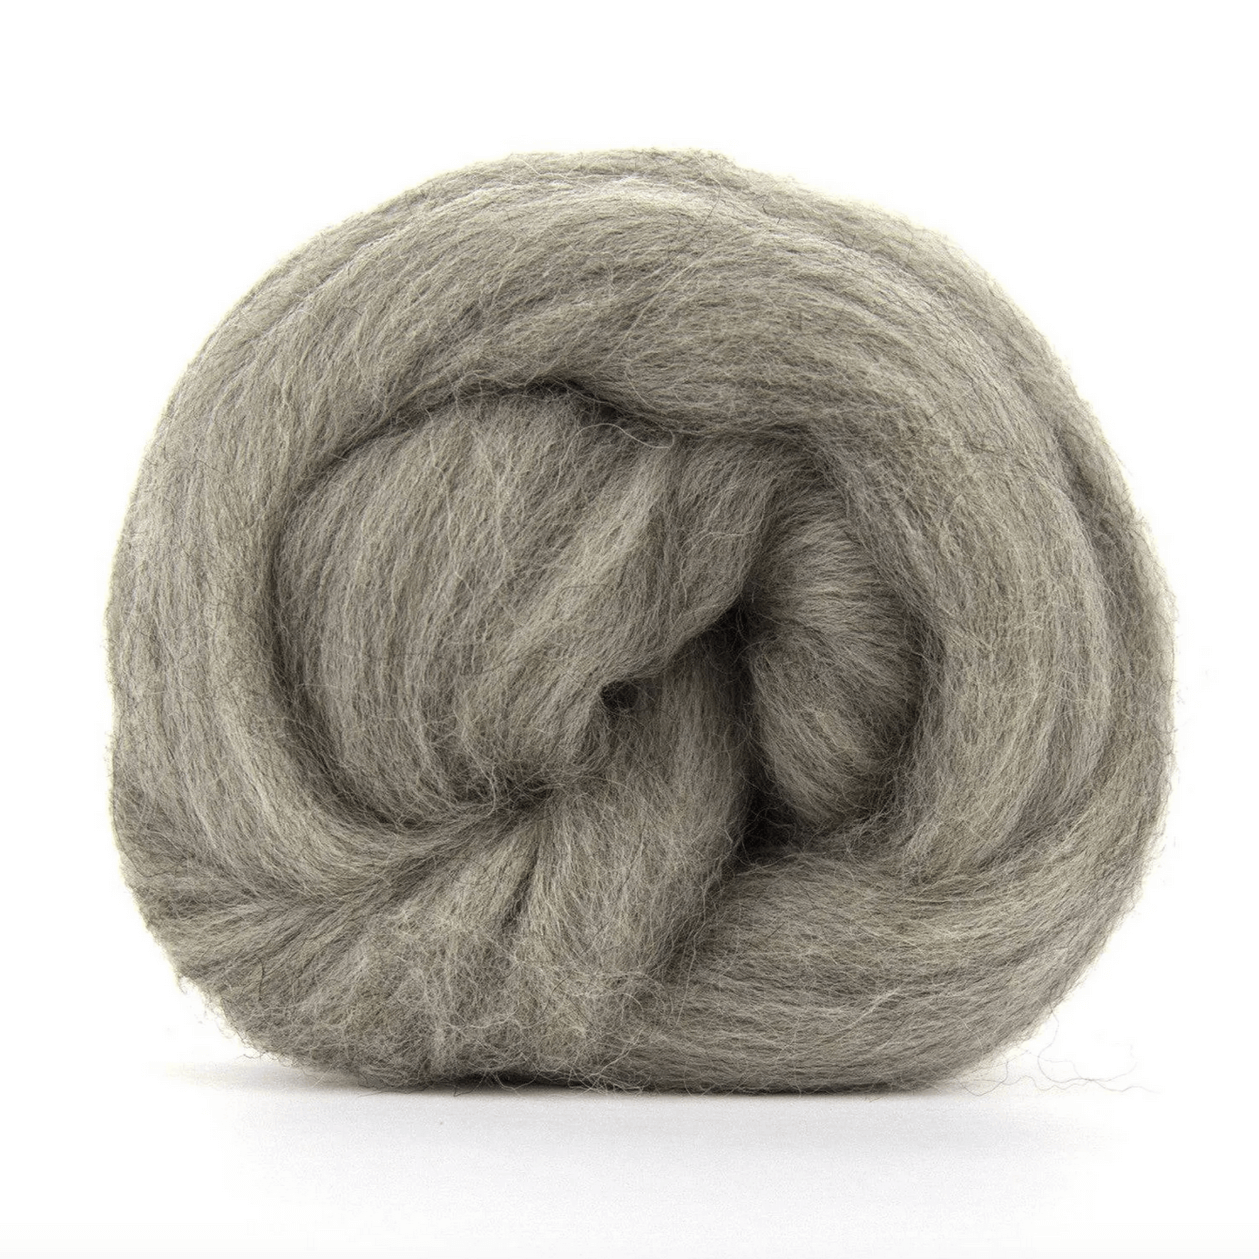 An unspun naturally light grey Shetland top for spinning, felting, dyeing, weaving